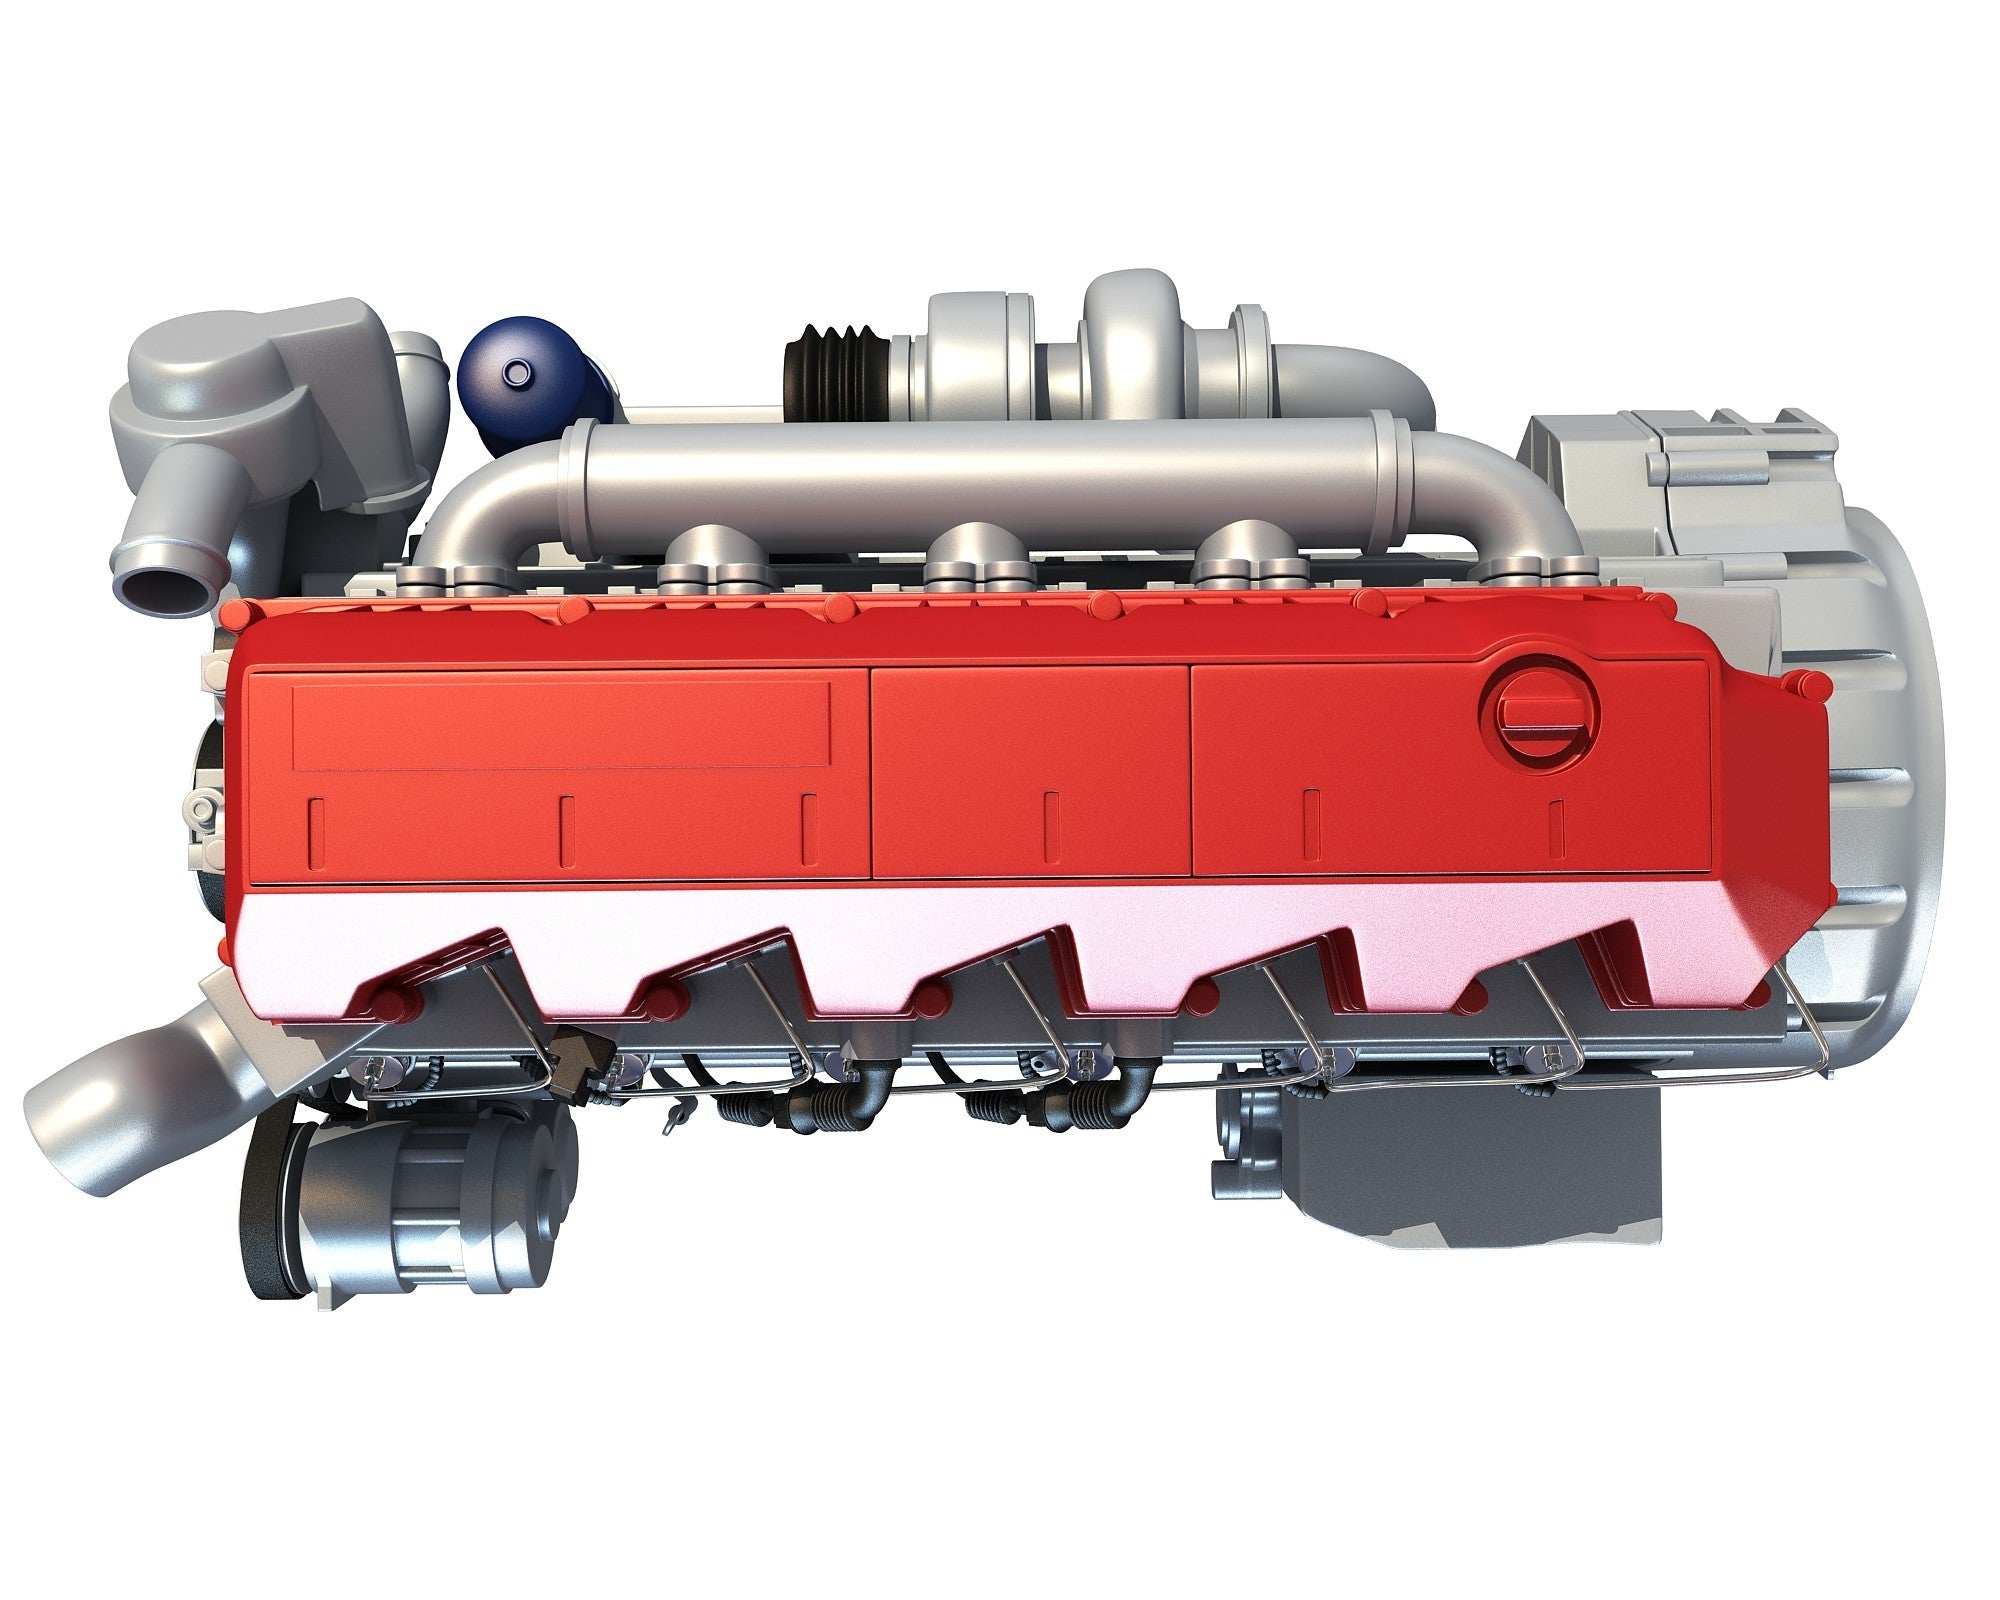 Truck Engine 3D Model